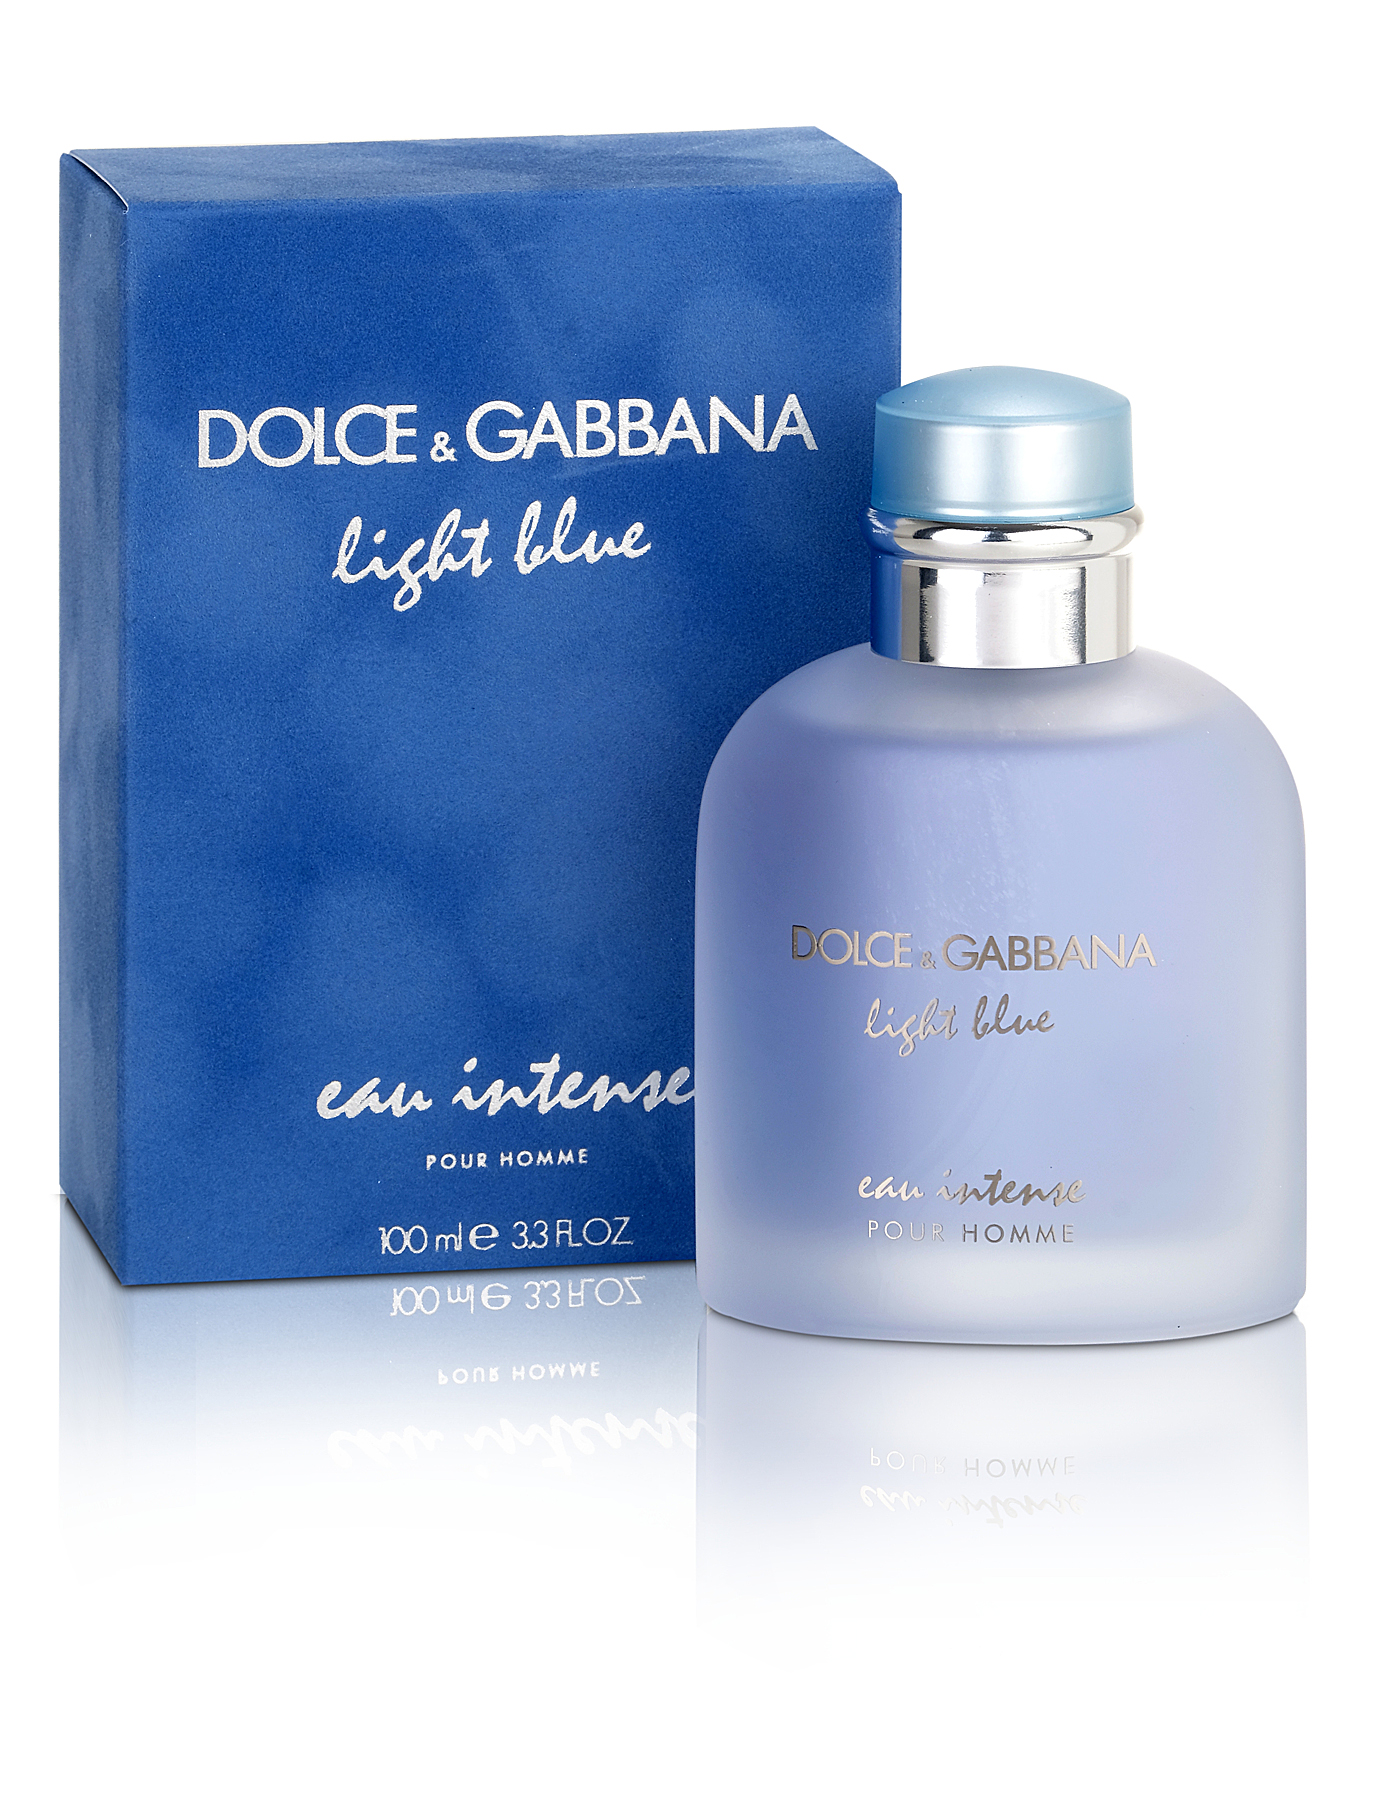 Gabbana intense pour homme. Дольче Габбана Лайт Блю 100 мл. Дольче Габбана Лайт Блю pour homme uk. Dolce Gabbana Light Blue pour homme мужские. Dolce Gabbana Light Blue intense мужские.